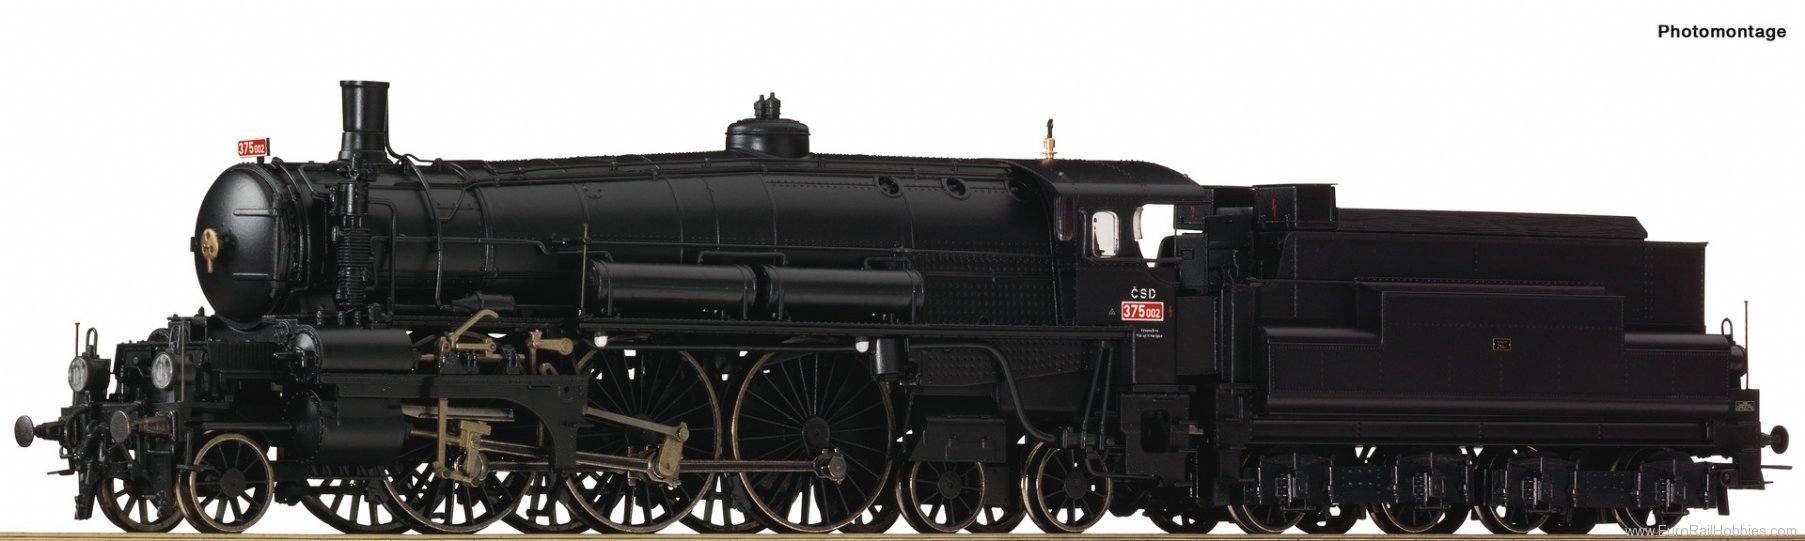 Roco 7100005 Steam locomotive 375 002, CSD (DC Analog)